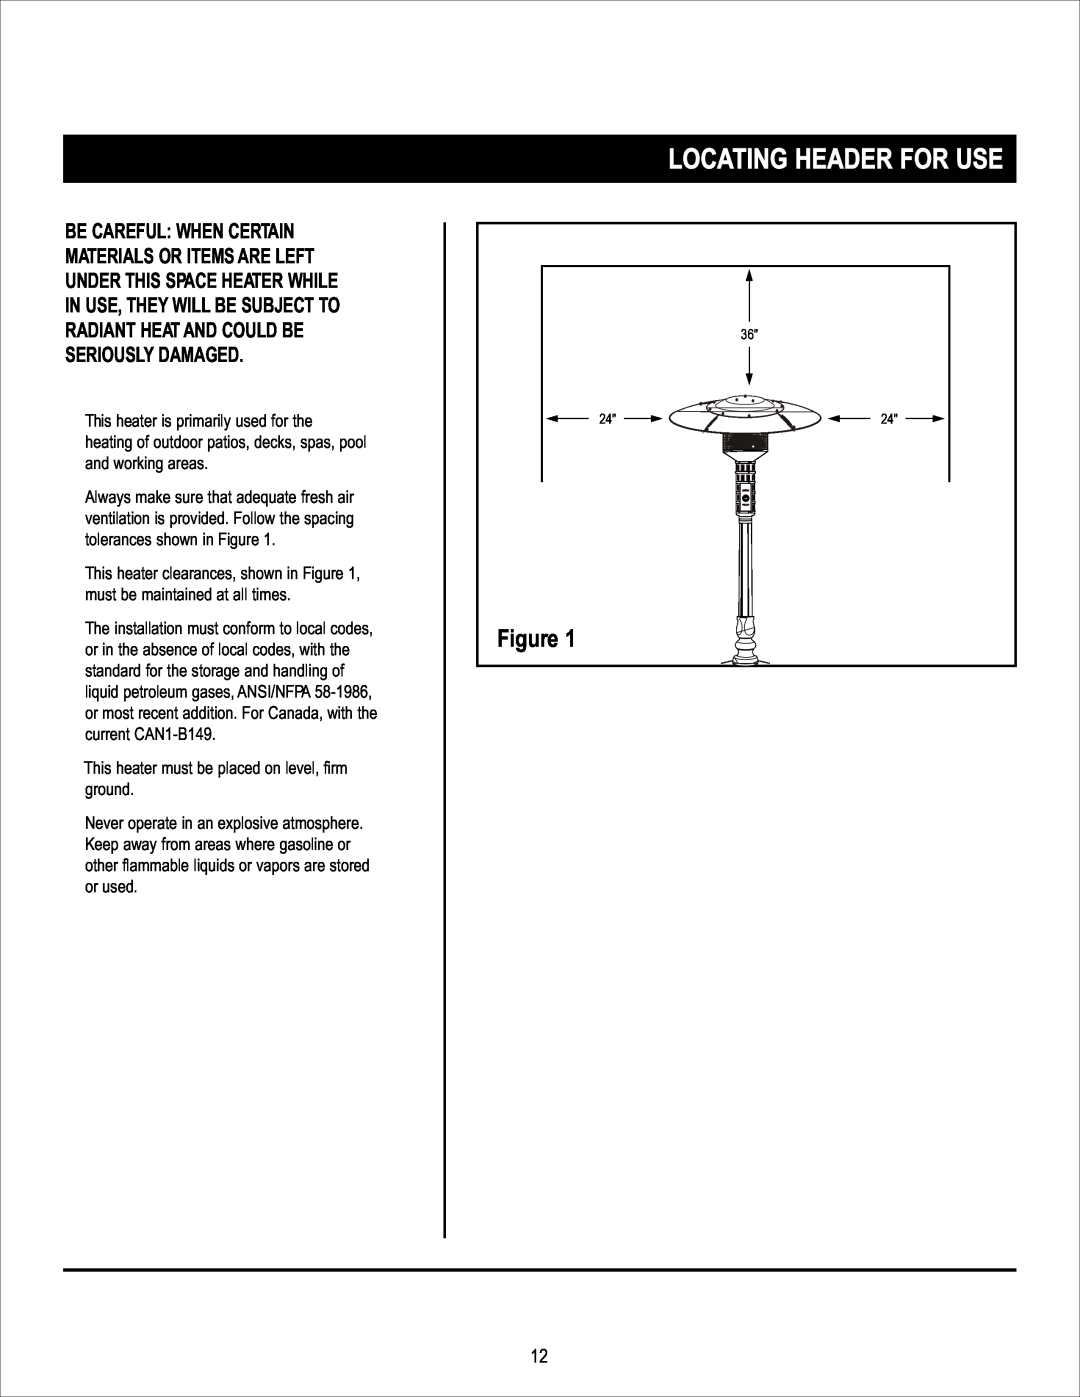 Napoleon Grills PTHC38PK manual Locating Header For Use 